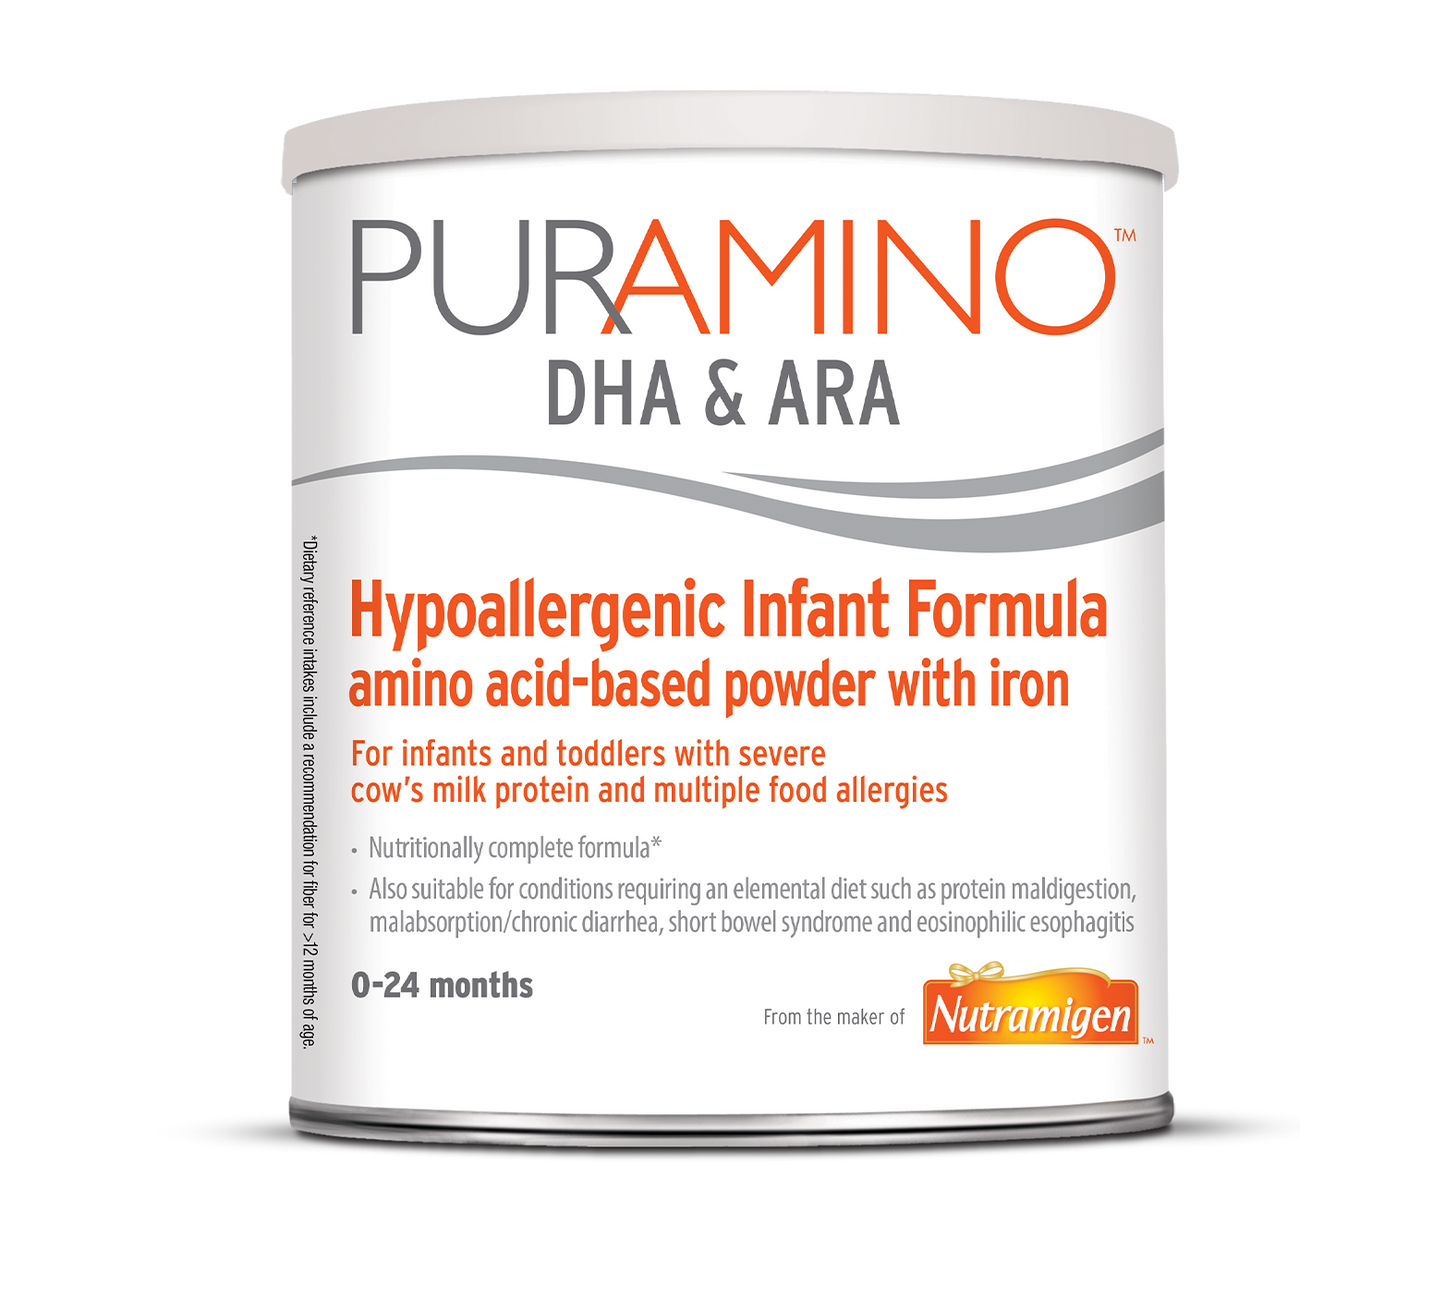 PurAmino DHA & ARA 14.1 oz. Infant Formula Powder Hypoallergenic Nutrition for Delicate Systems